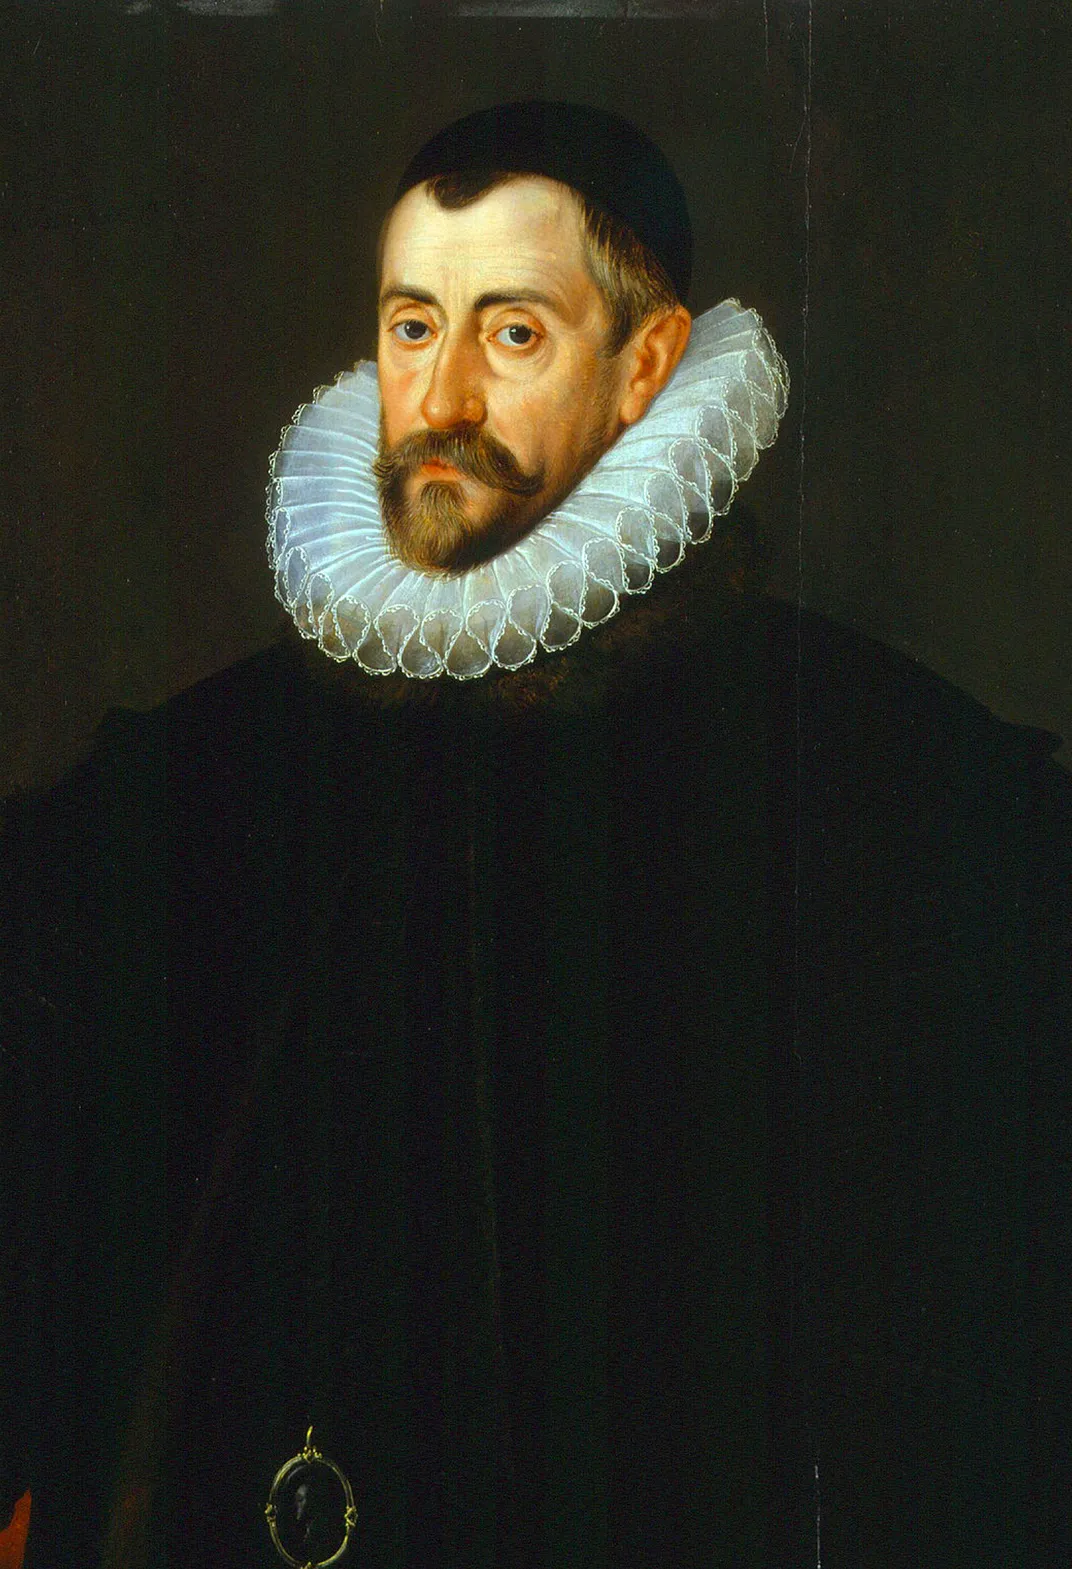 Francis Walsingham, Elizabeth I's spymaster